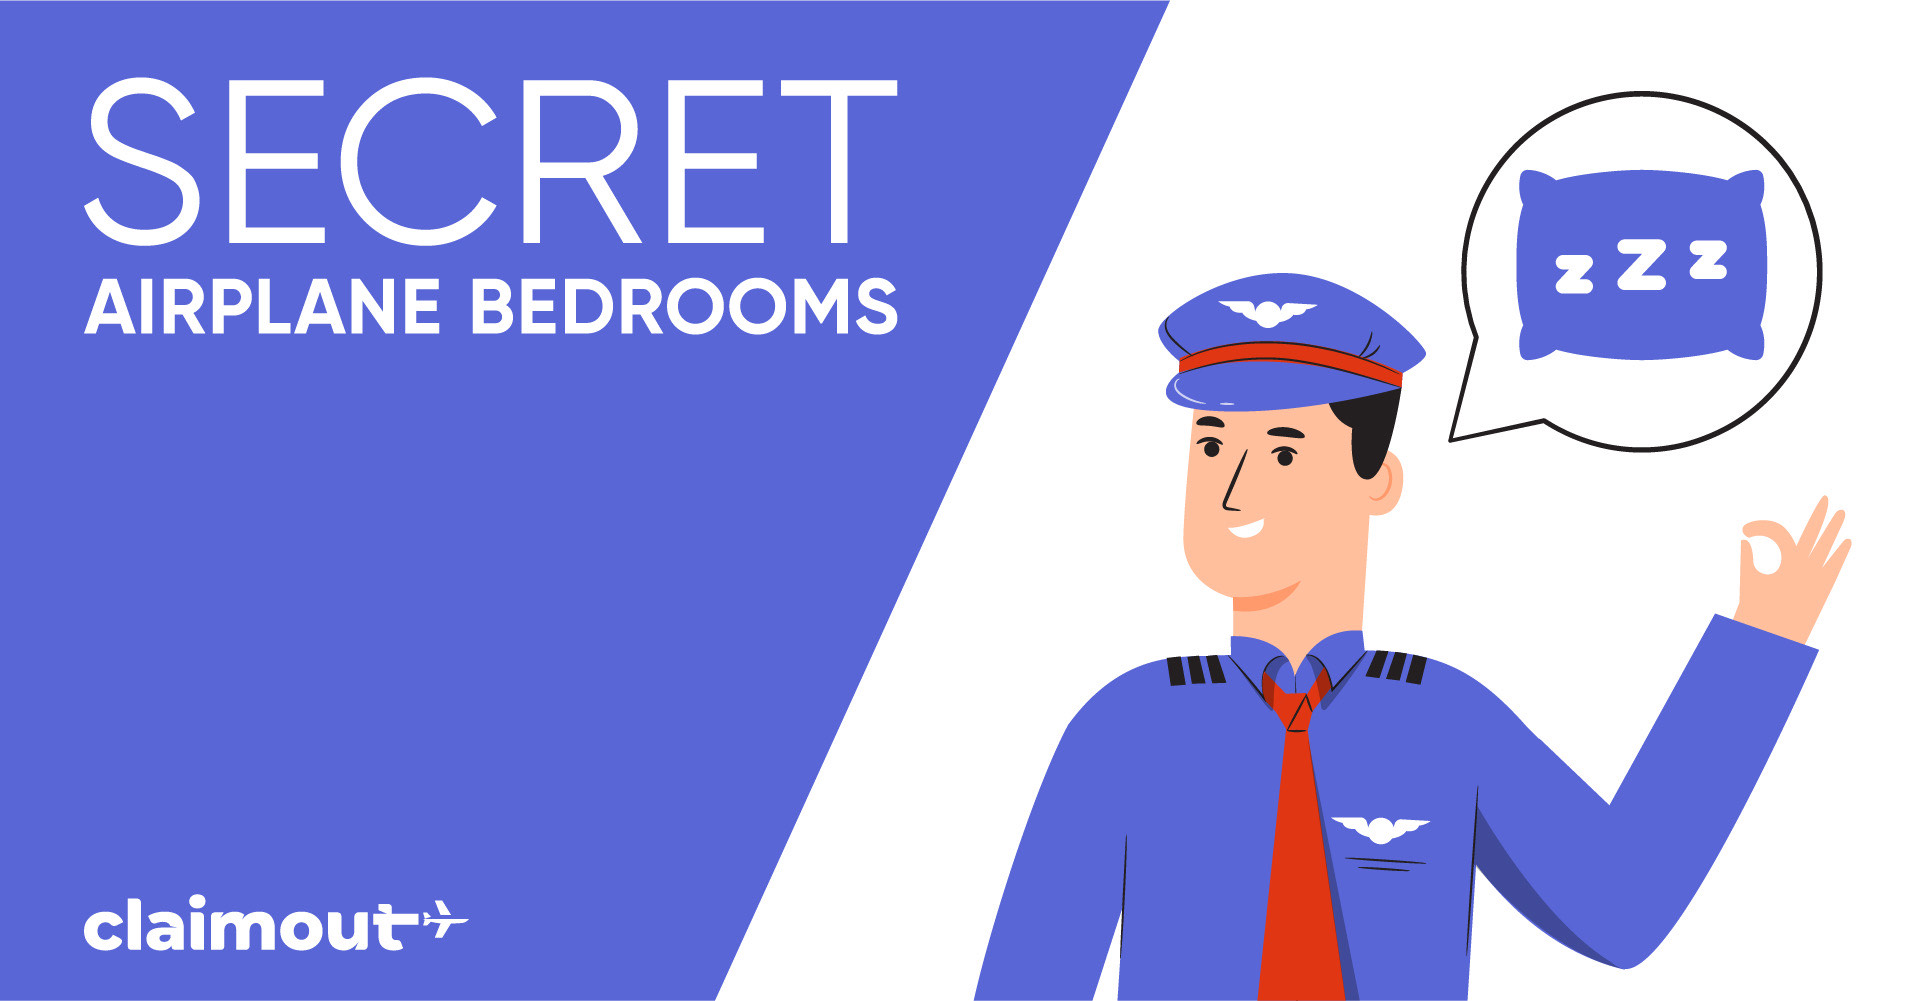 Secret Airplane Bedrooms